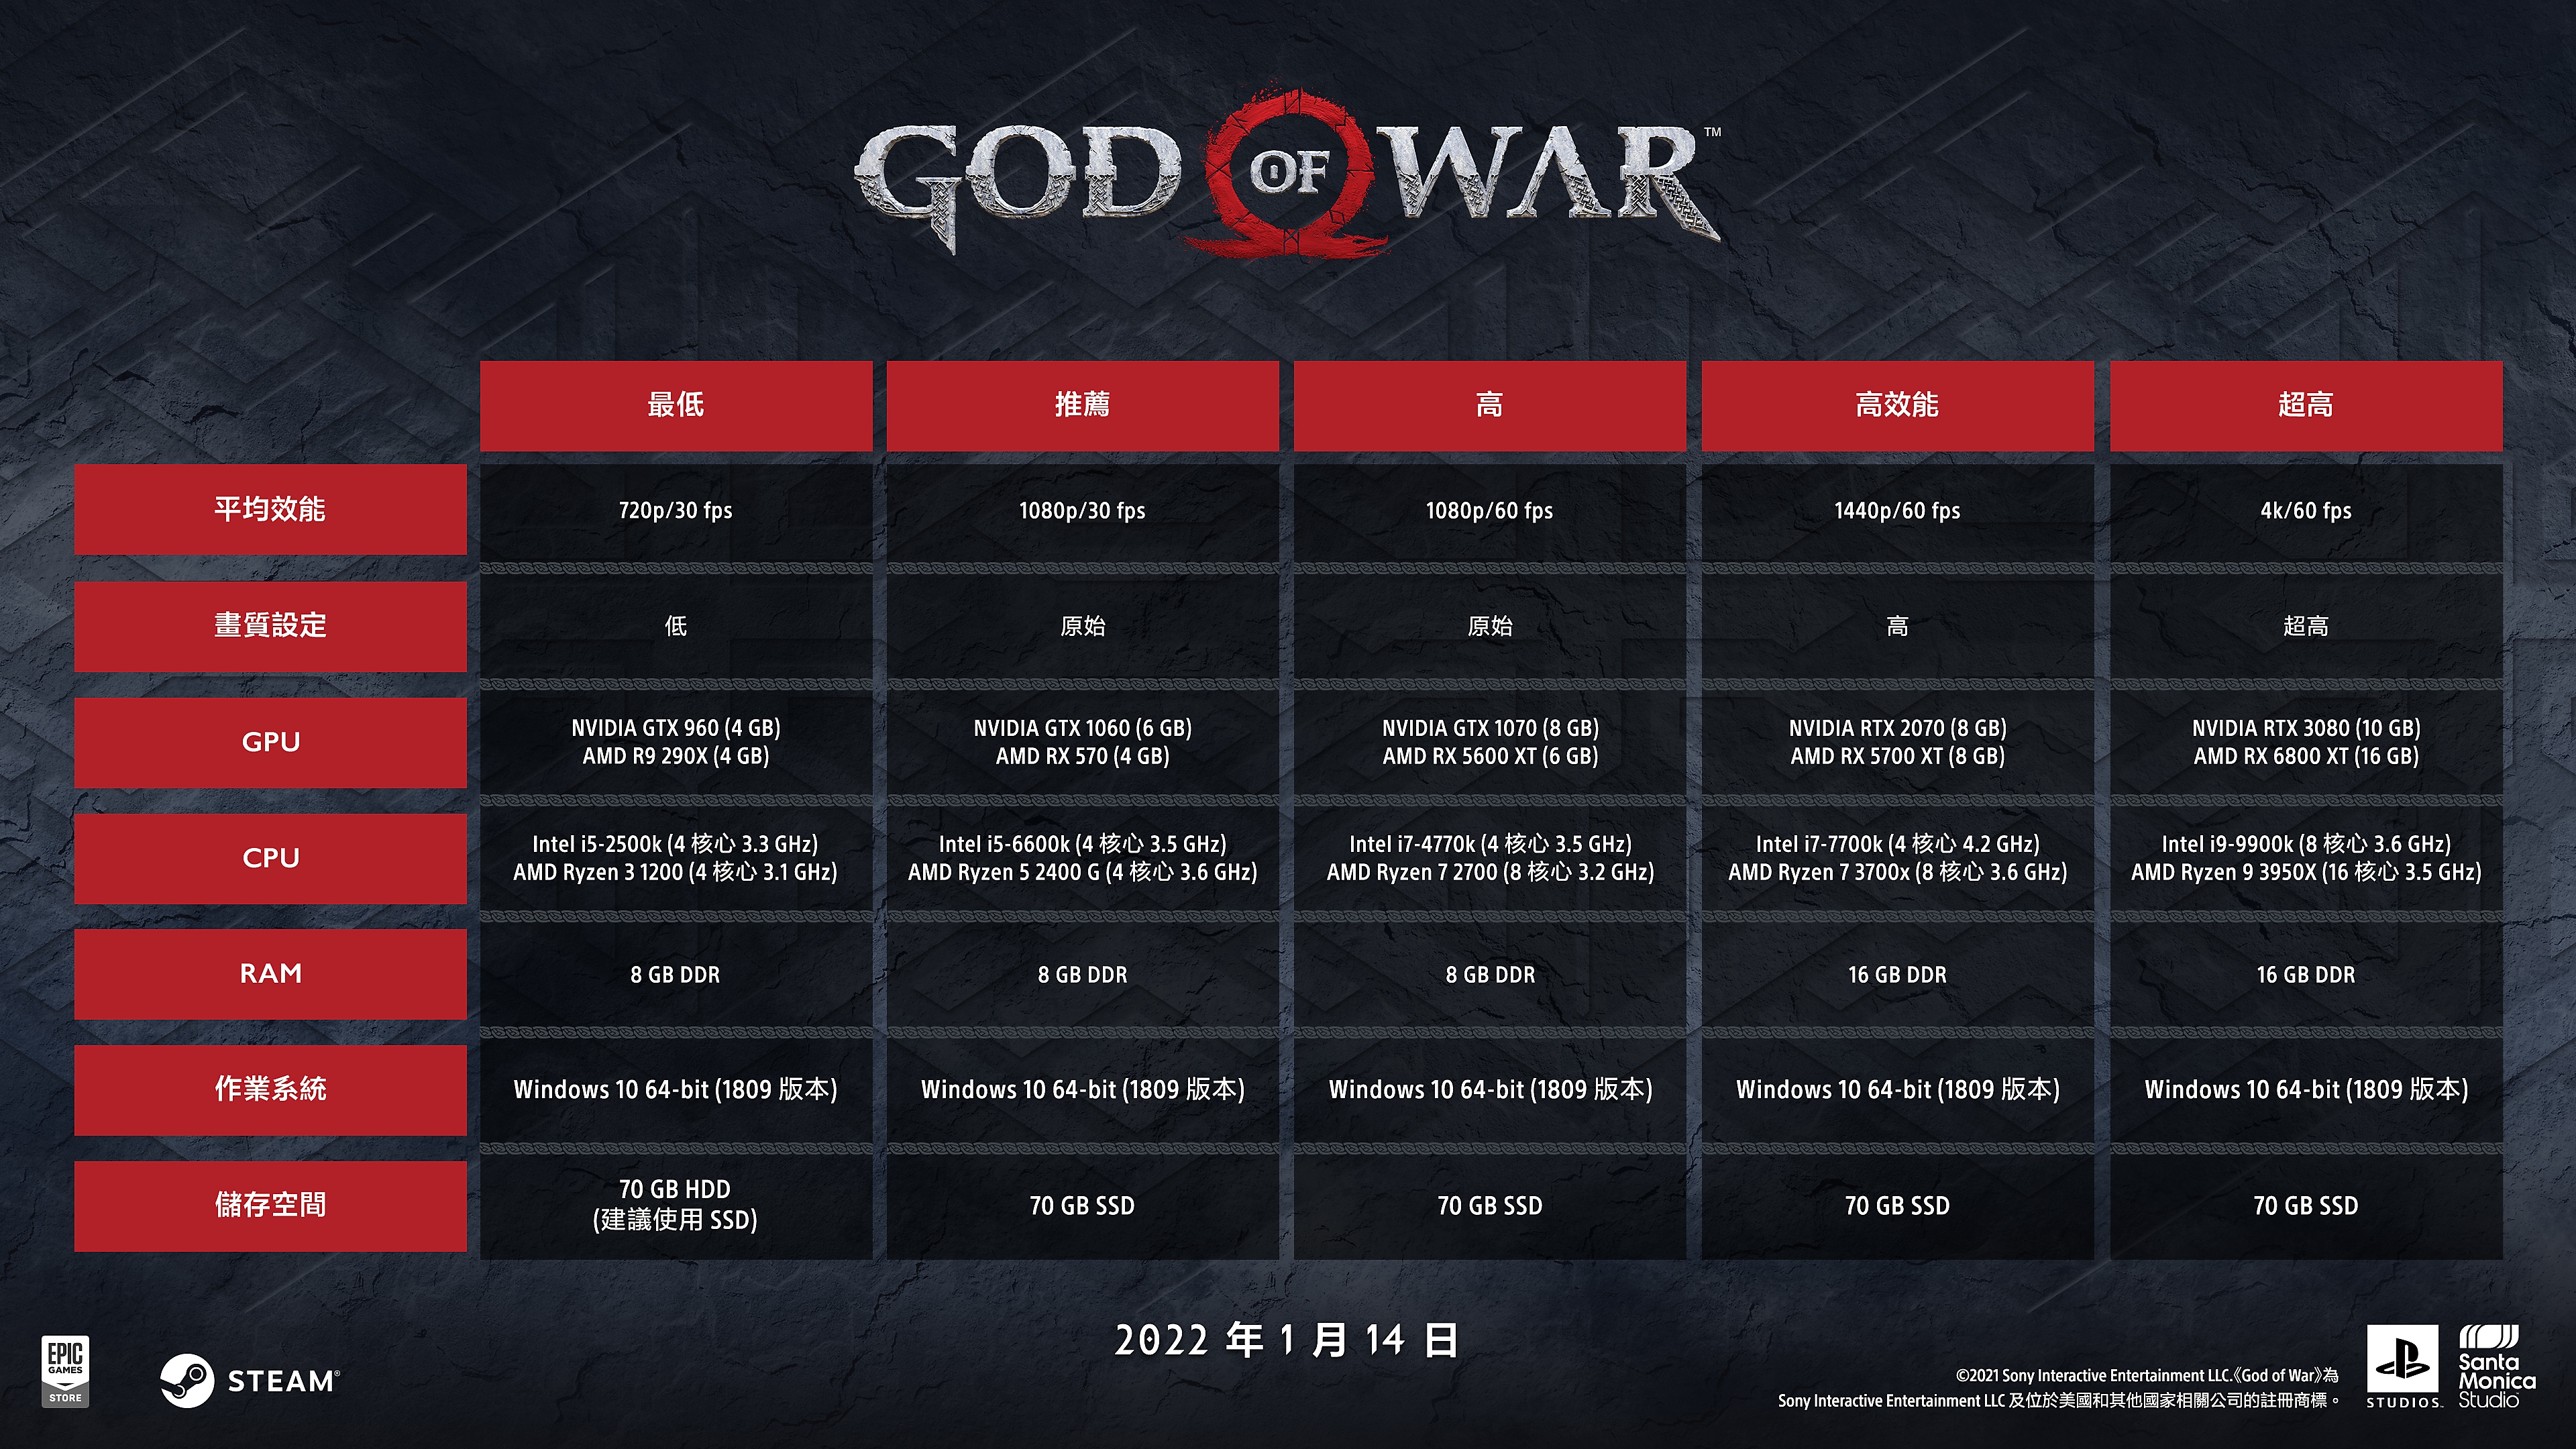 《God of War》PC 版系統需求